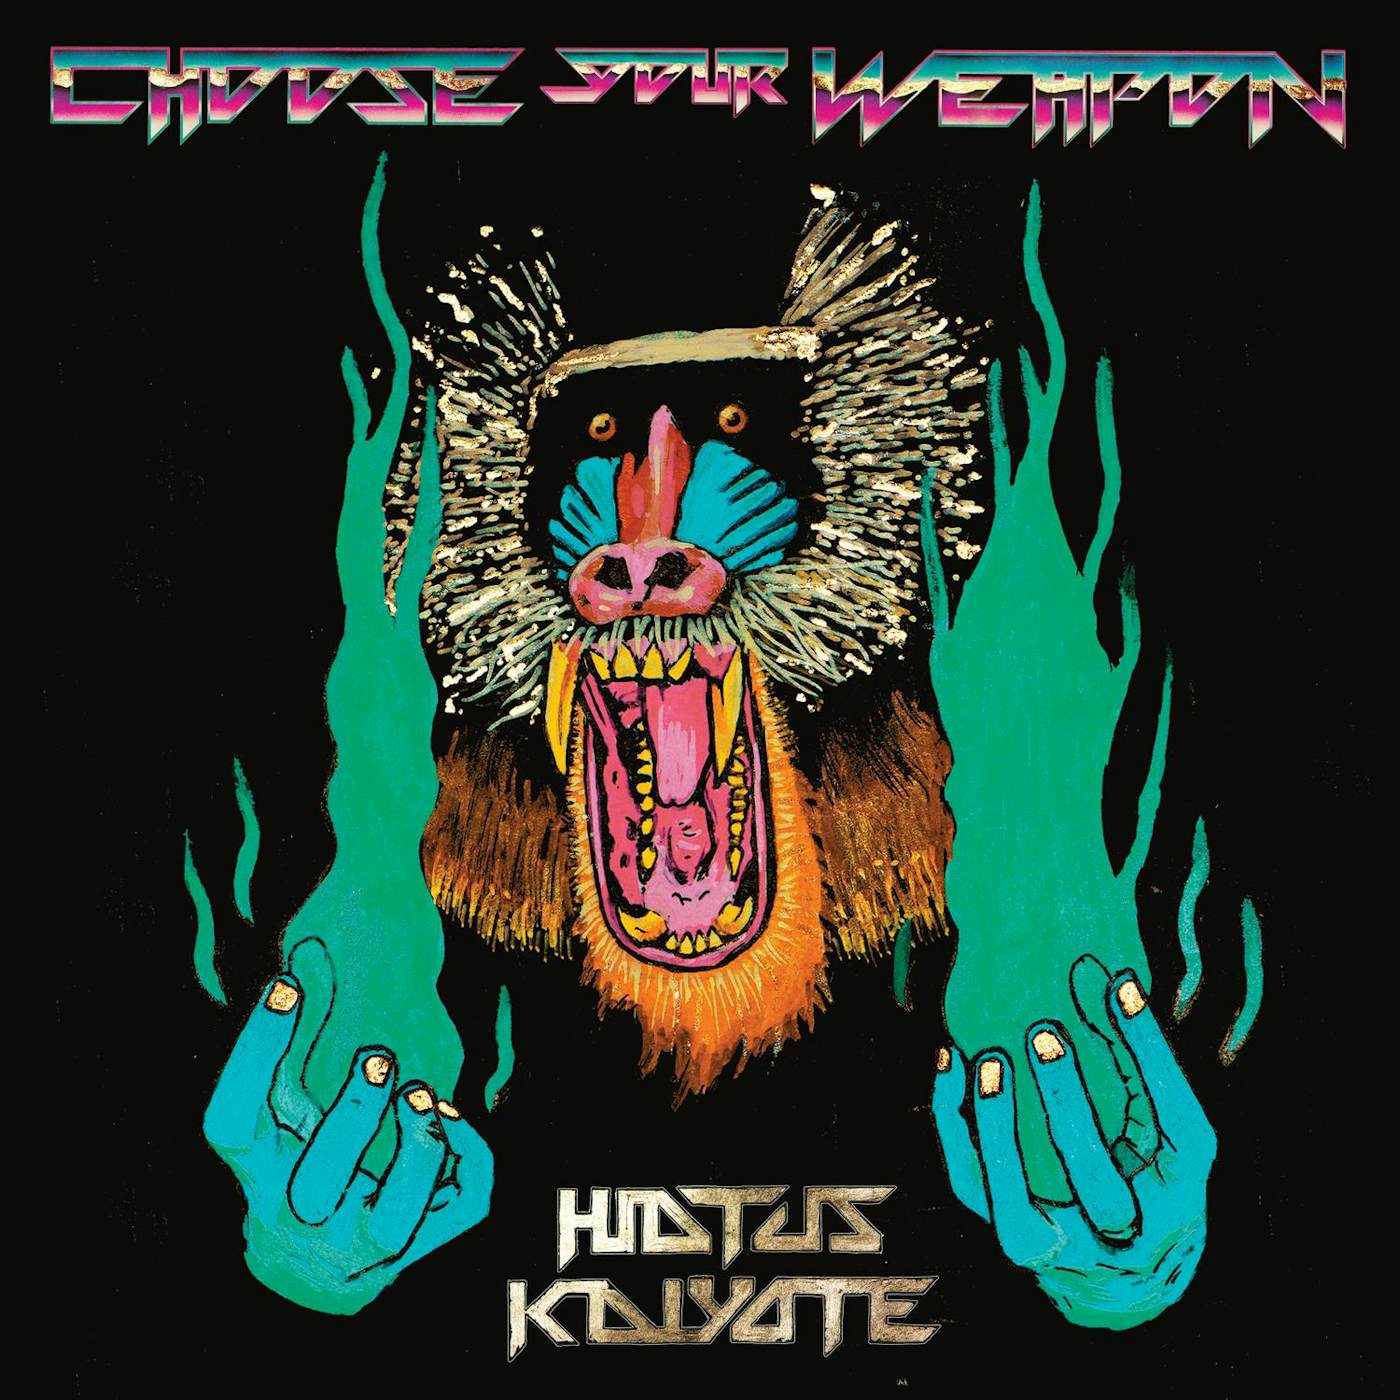 Hiatus Kaiyote Choose Your Weapon Vinyl Record